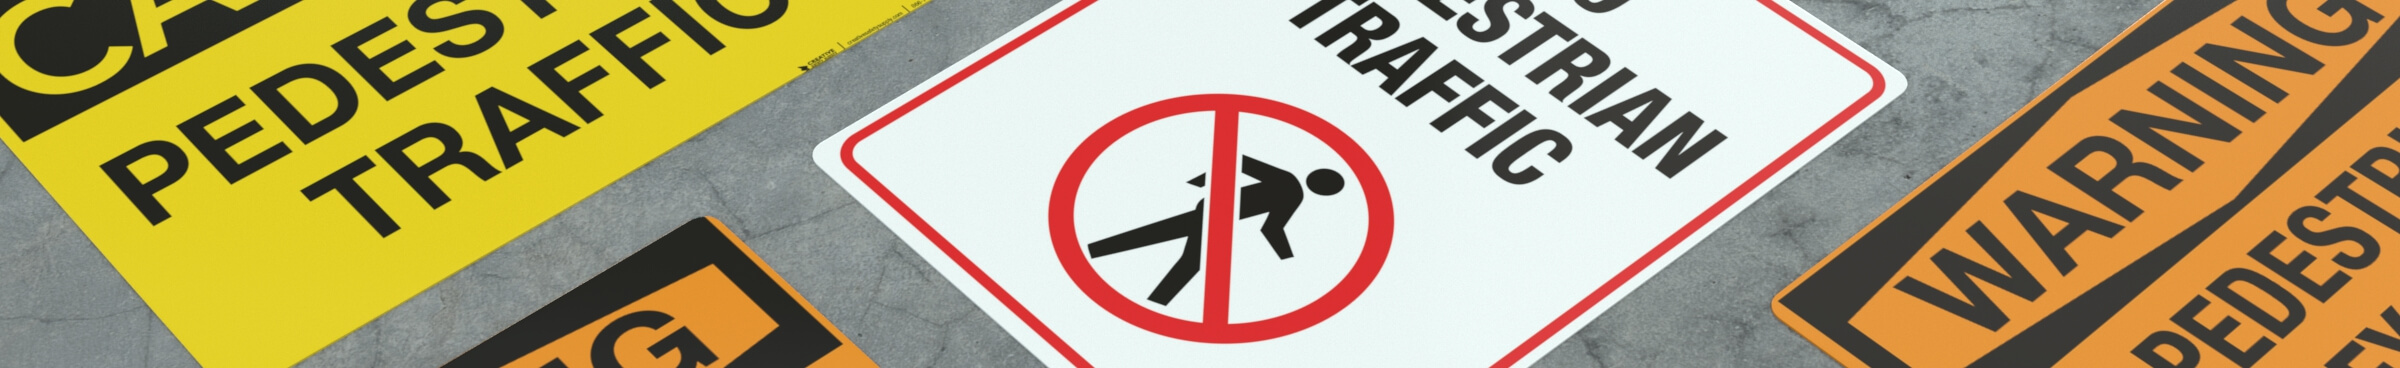 Pedestrians Walkway Do Not Block Green Anti-Slip Floor Sticker Decal 17 in longest side